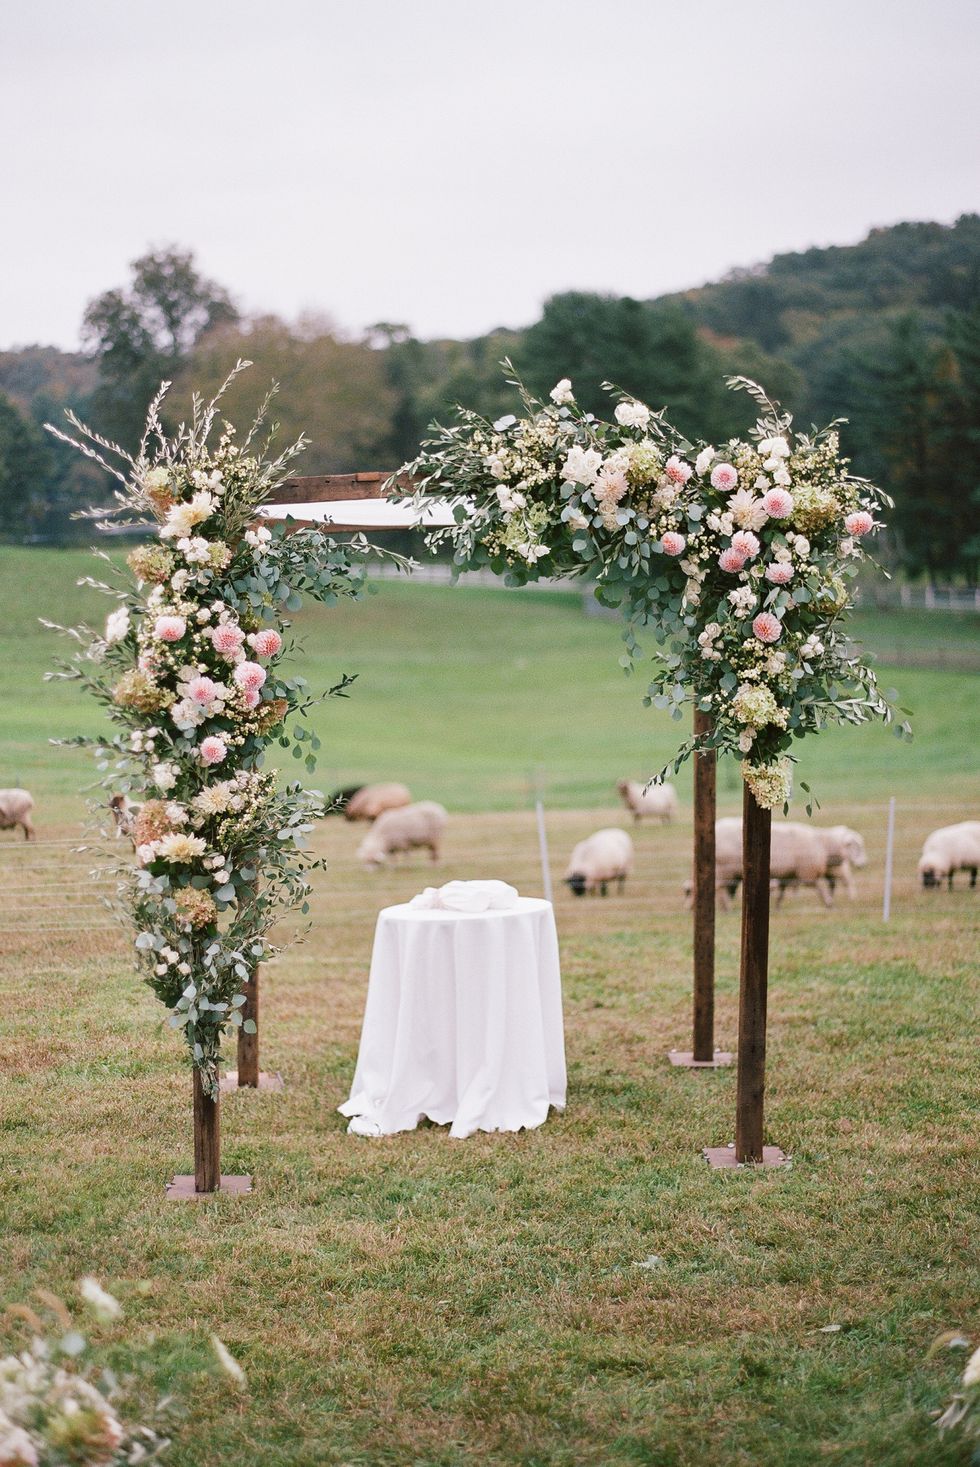 Photograph, Ceremony, Bride, Flower Arranging, Flower, Wedding, Dress, Plant, Aisle, Event, 